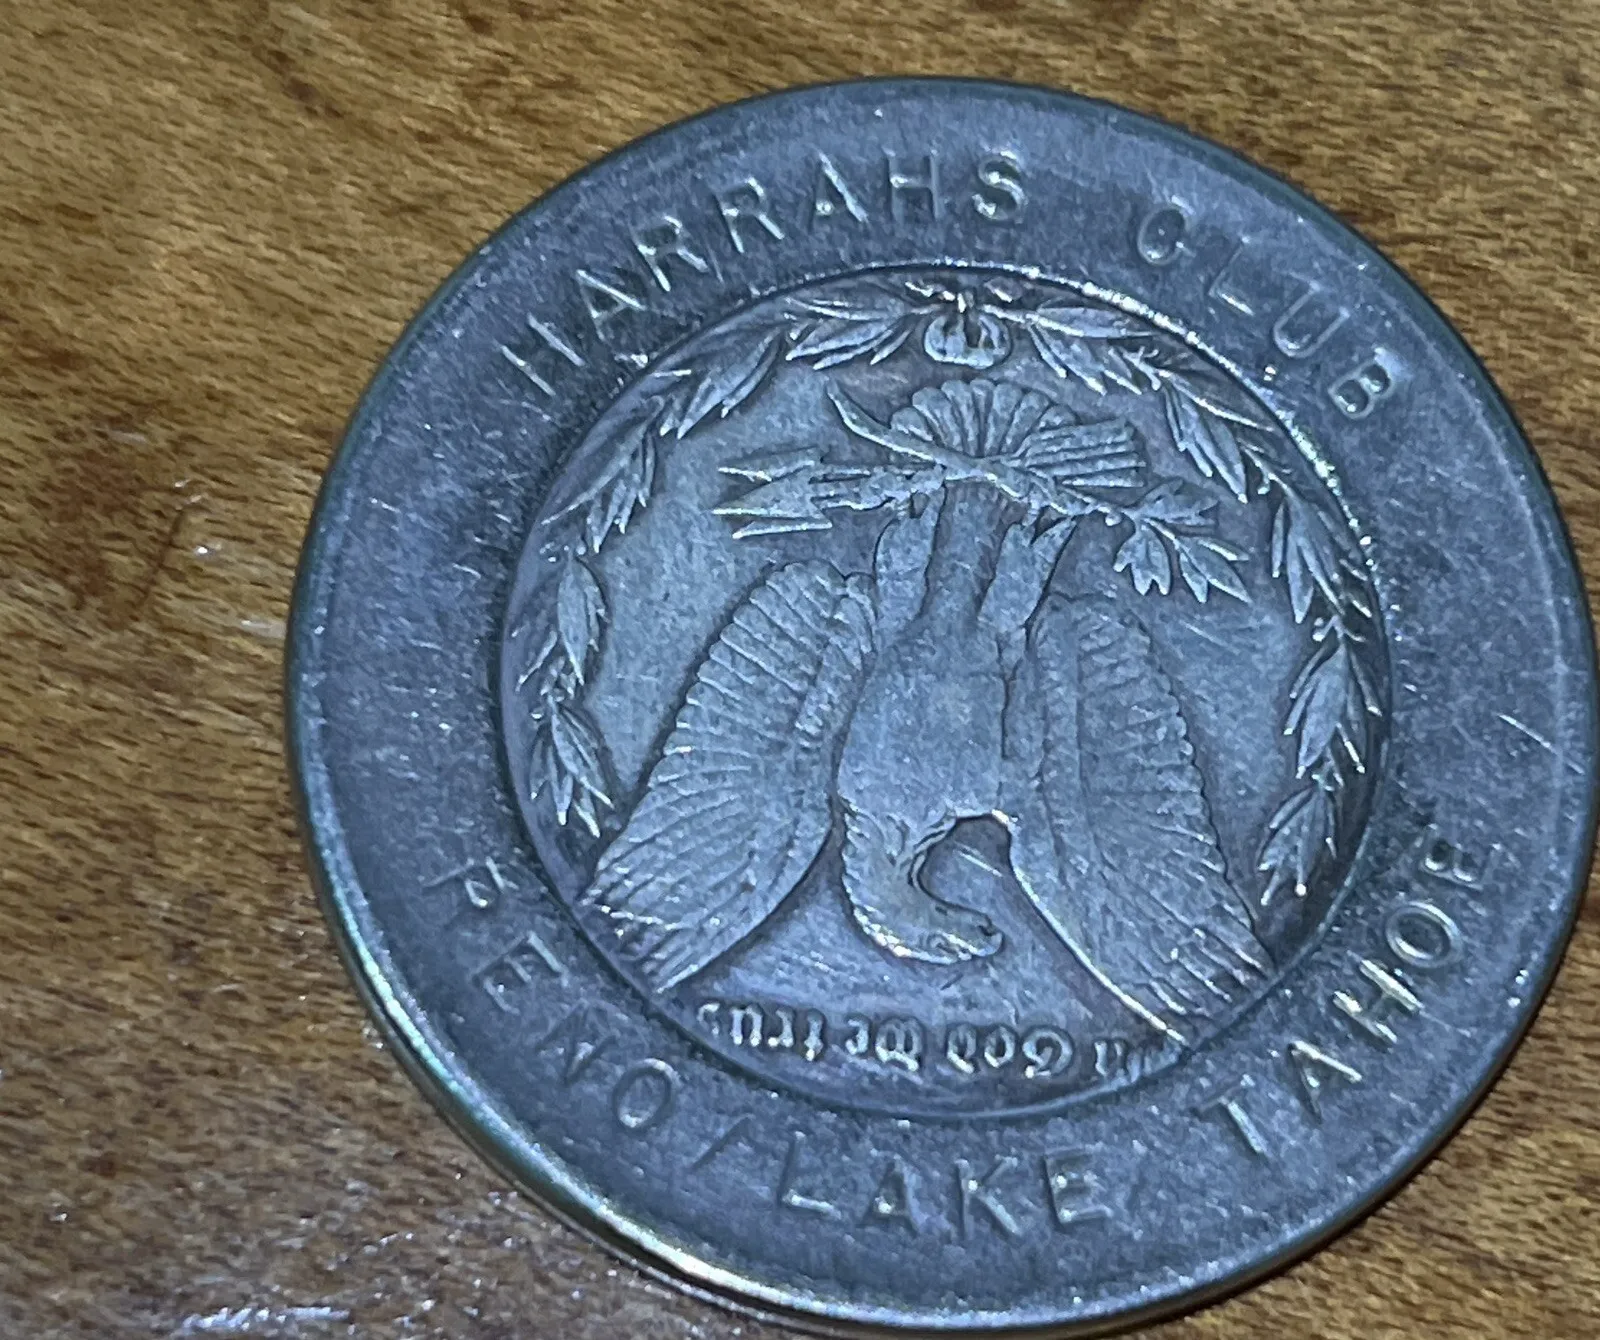 Reno Lake, Nev. Harrah’s Club Encased 1897 Silver Dollar!